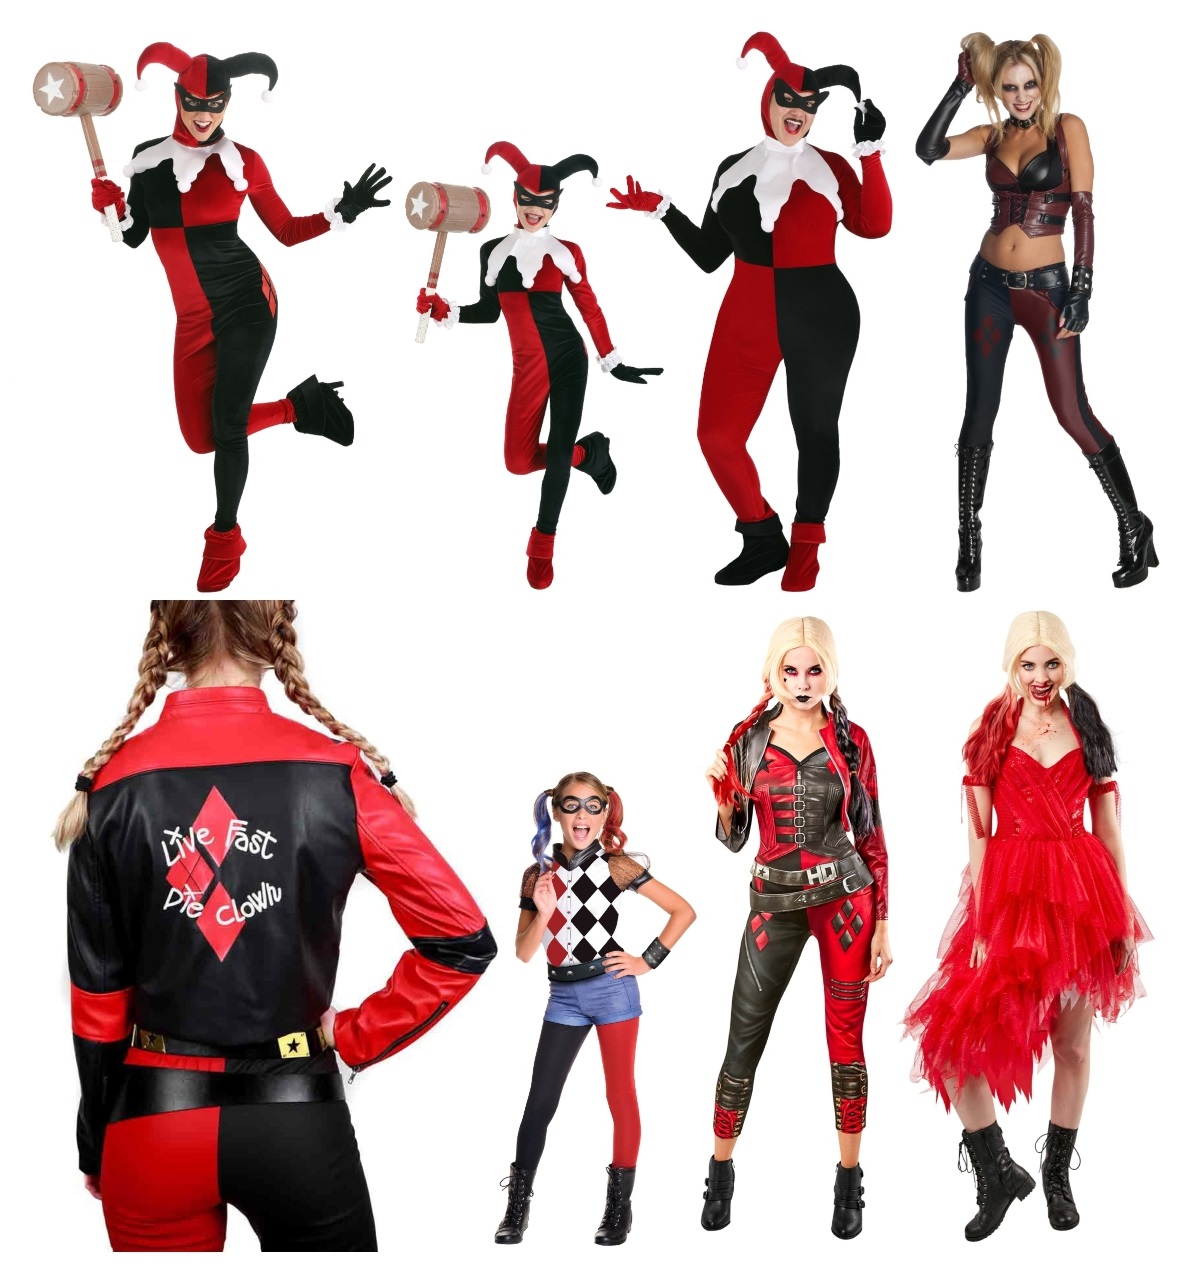 4 Harley Quinn Makeup Tutorials - HalloweenCostumes.com Blog